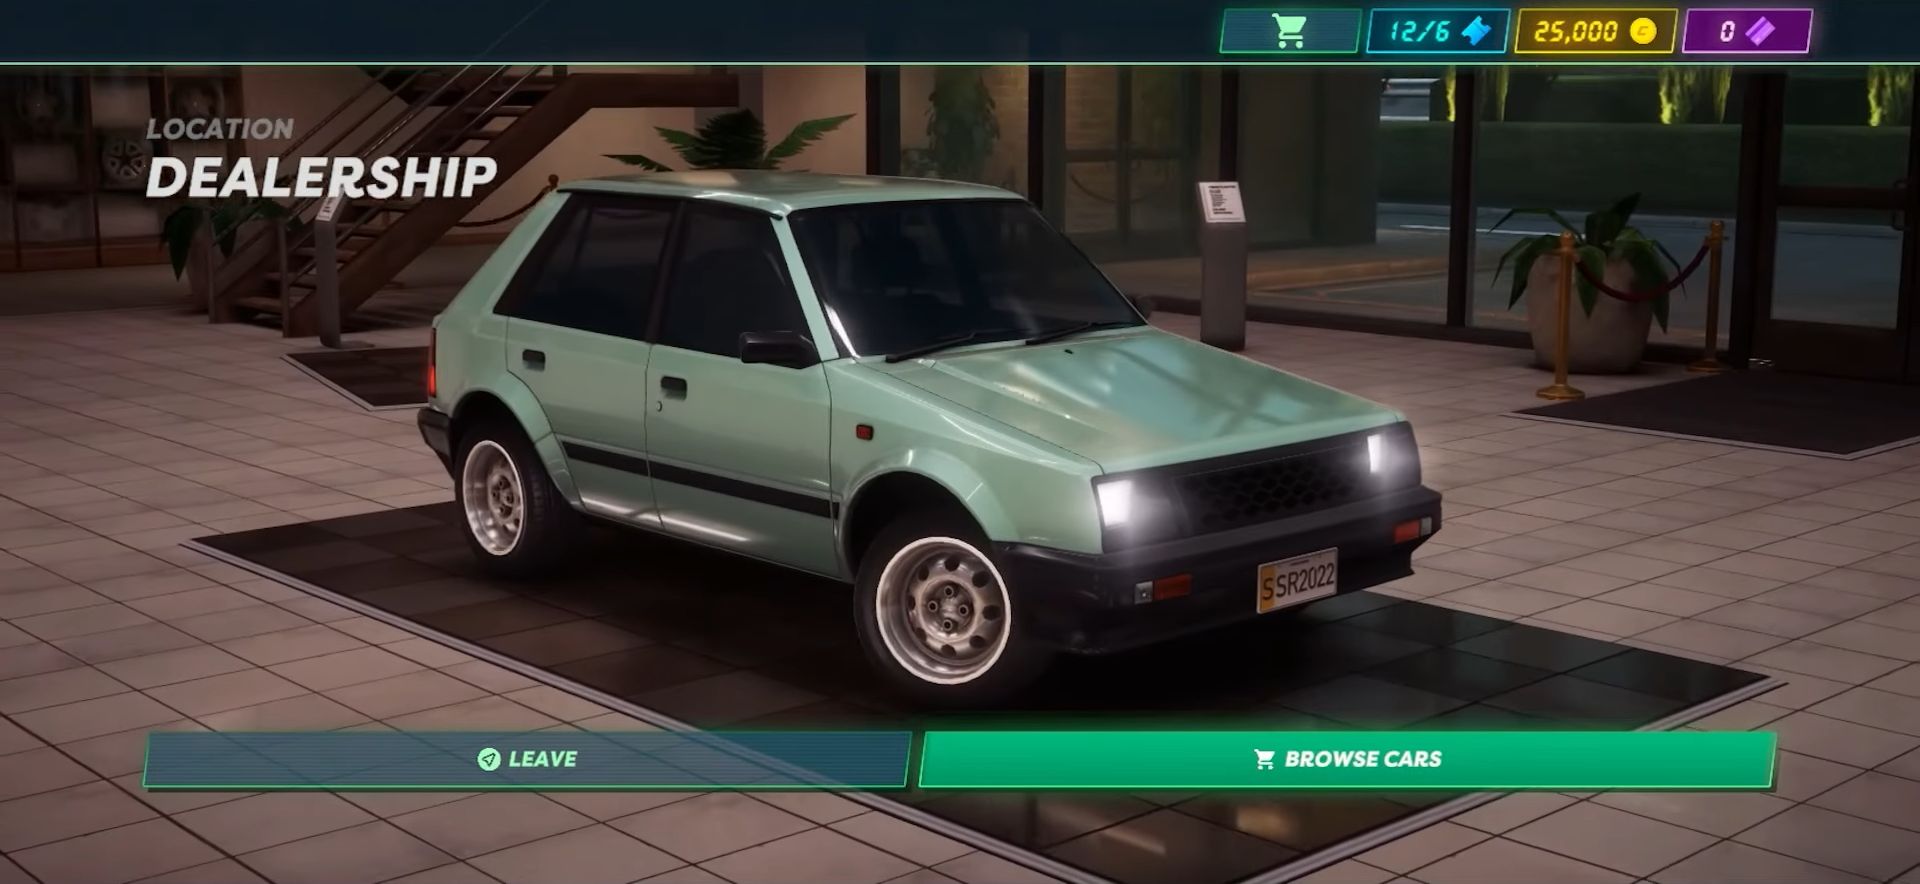 Static Shift Racing - Android game screenshots.